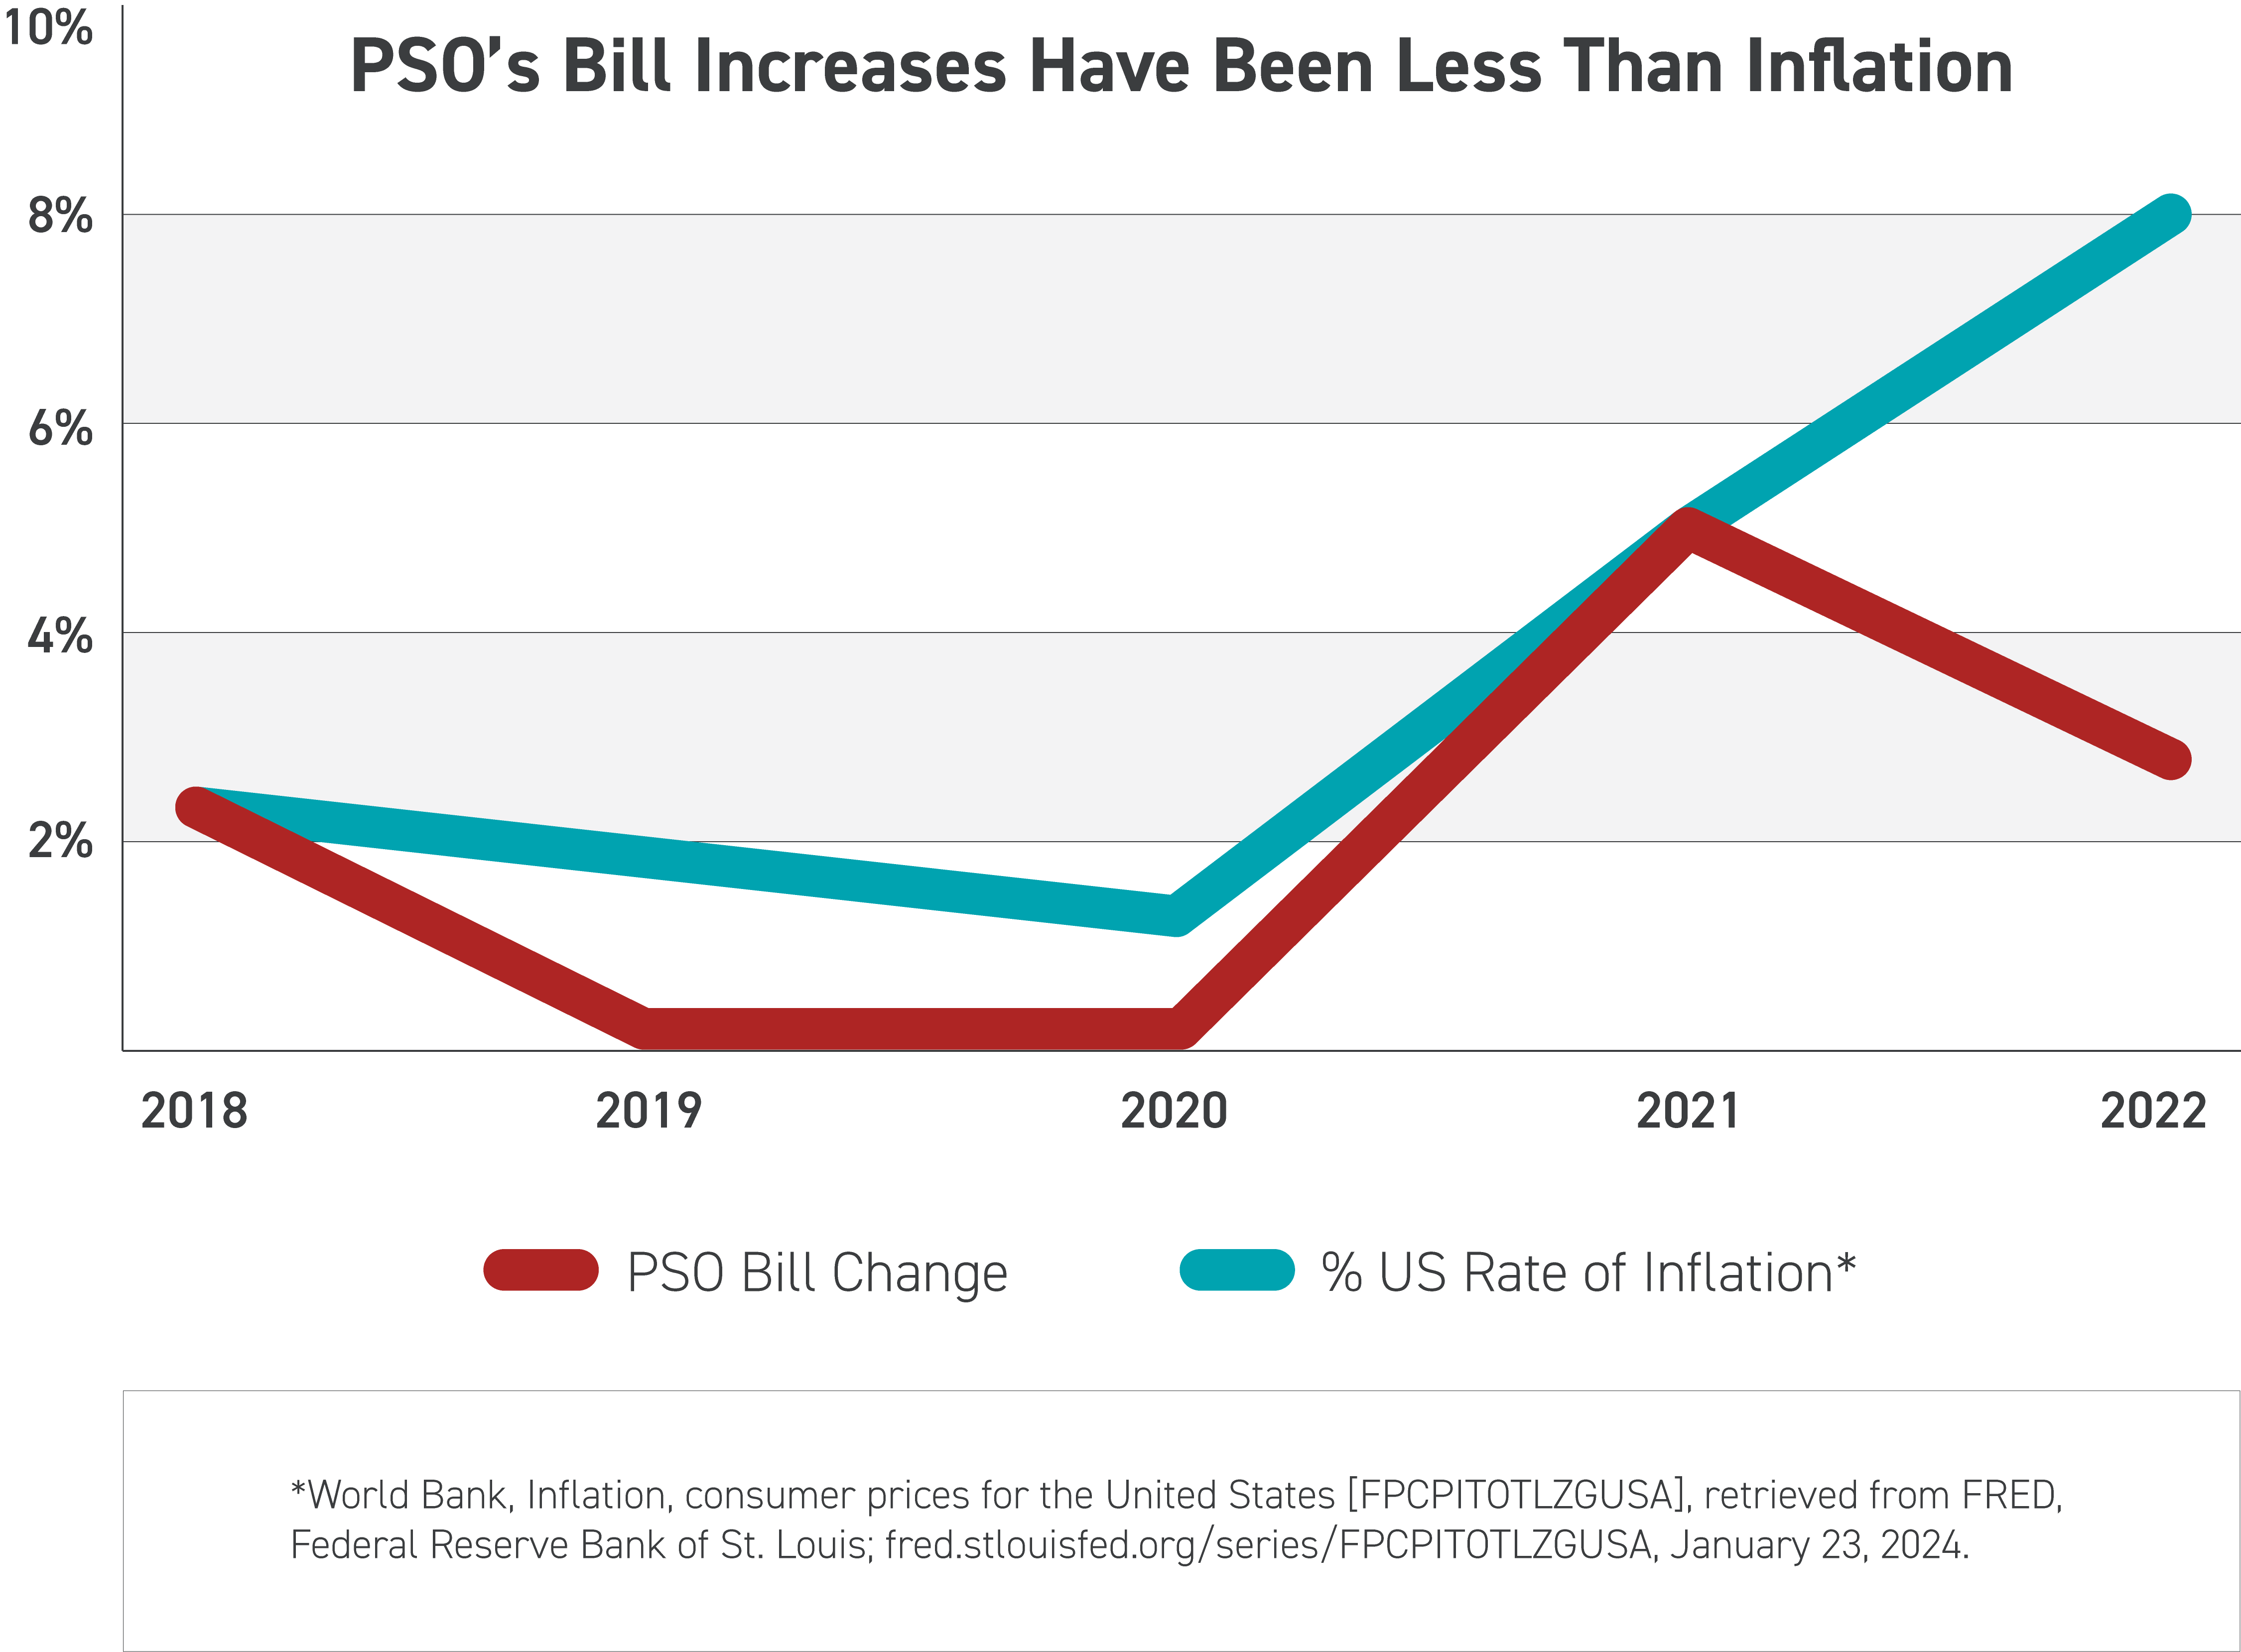 bill increases versus inflation